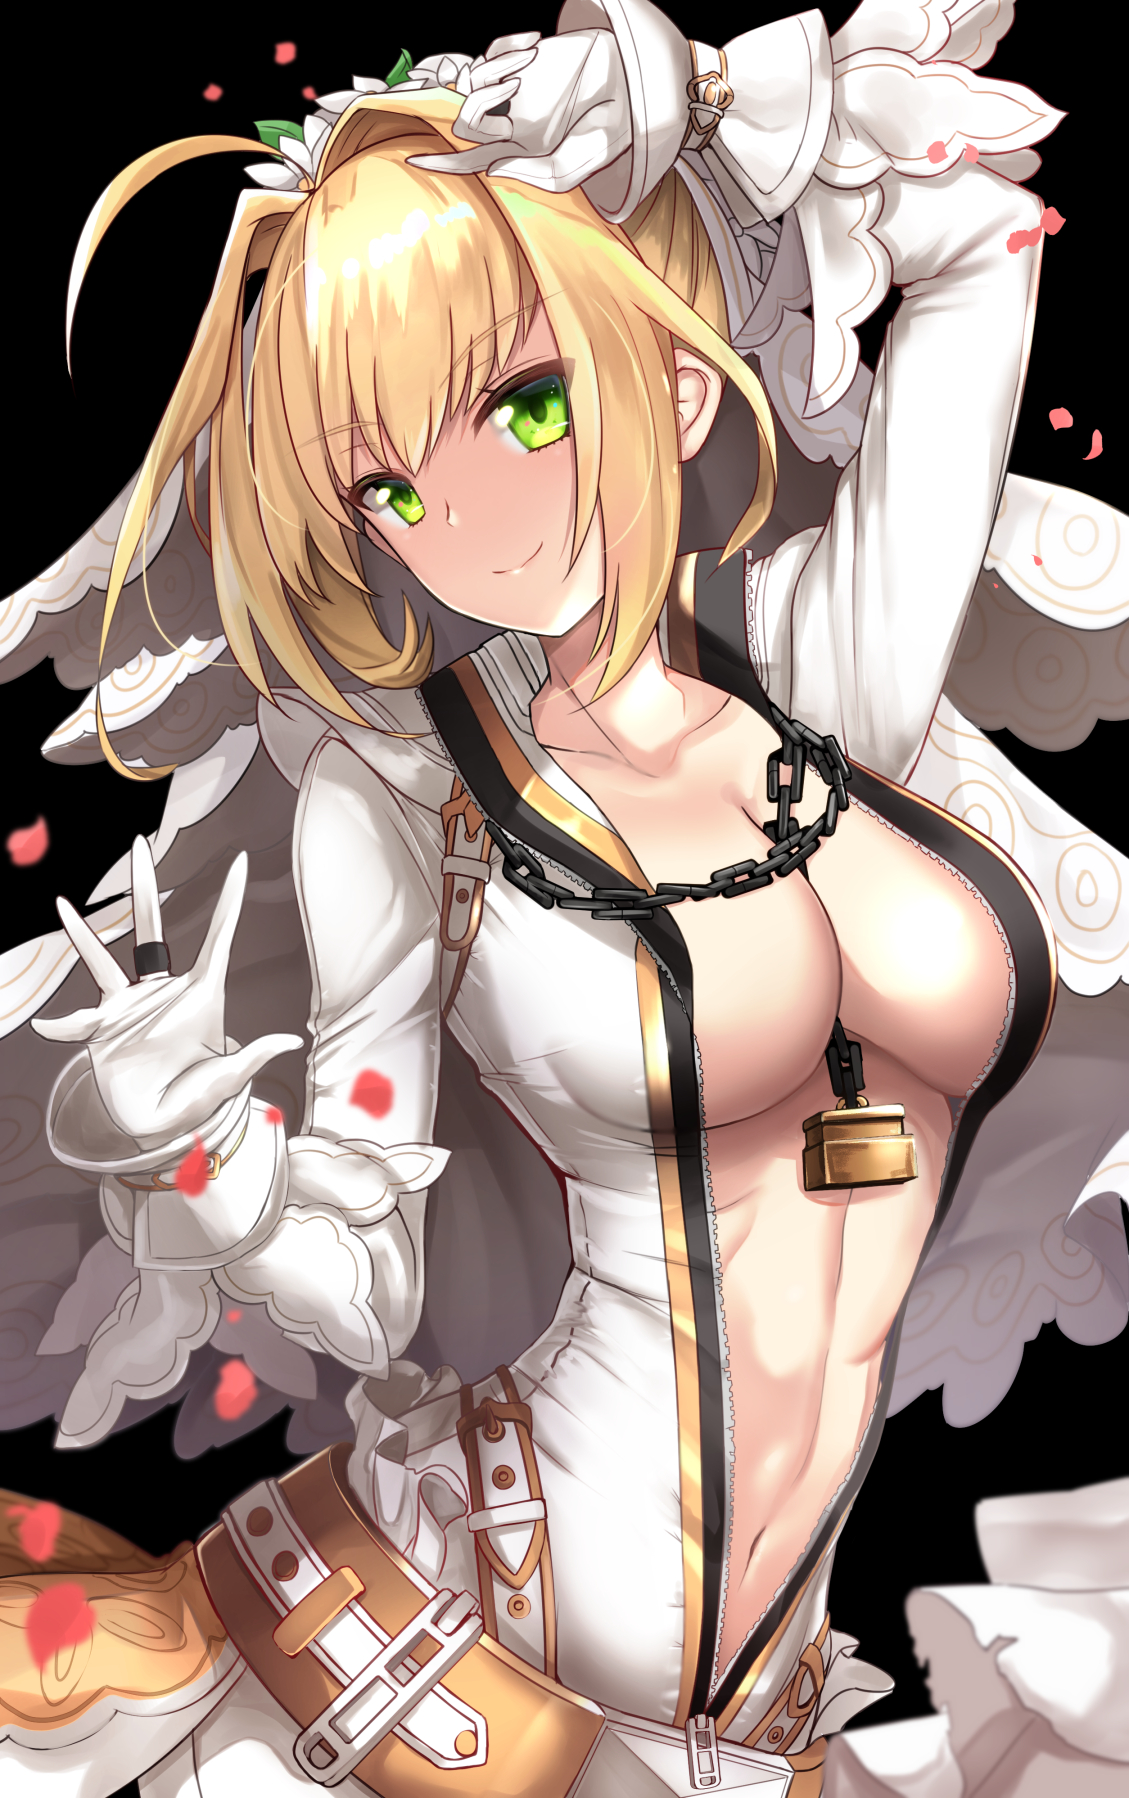 Anime 1129x1798 cleavage Fate/Grand Order no bra open shirt Saber Bride blonde gloves green eyes Nero Claudius Fate series anime girls